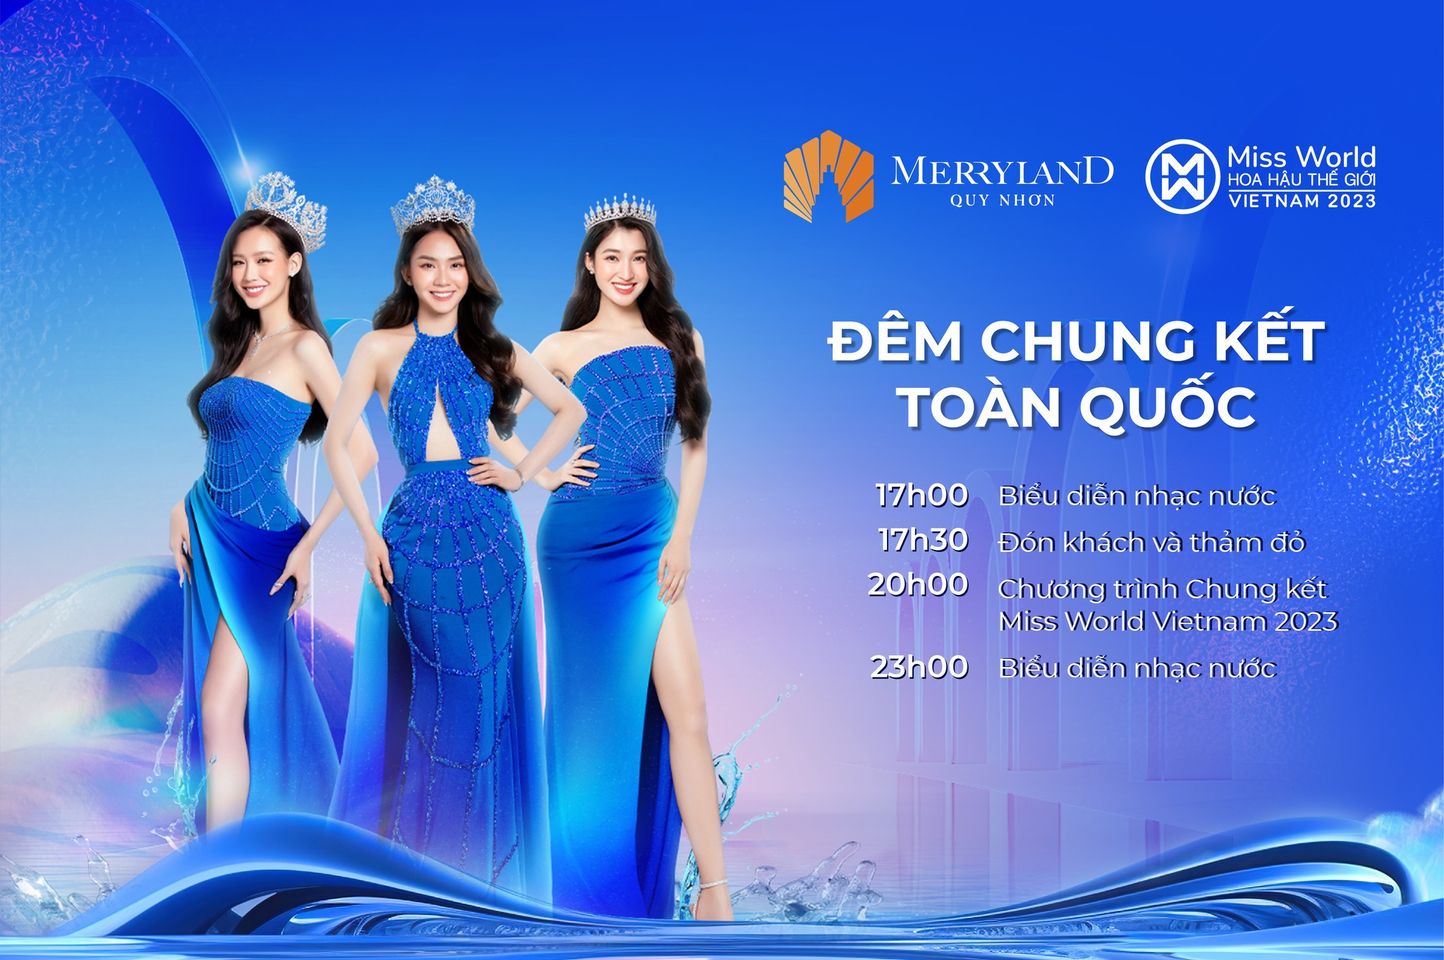 lich-trinh-chung-ket-miss-world-vietnam-2023-1